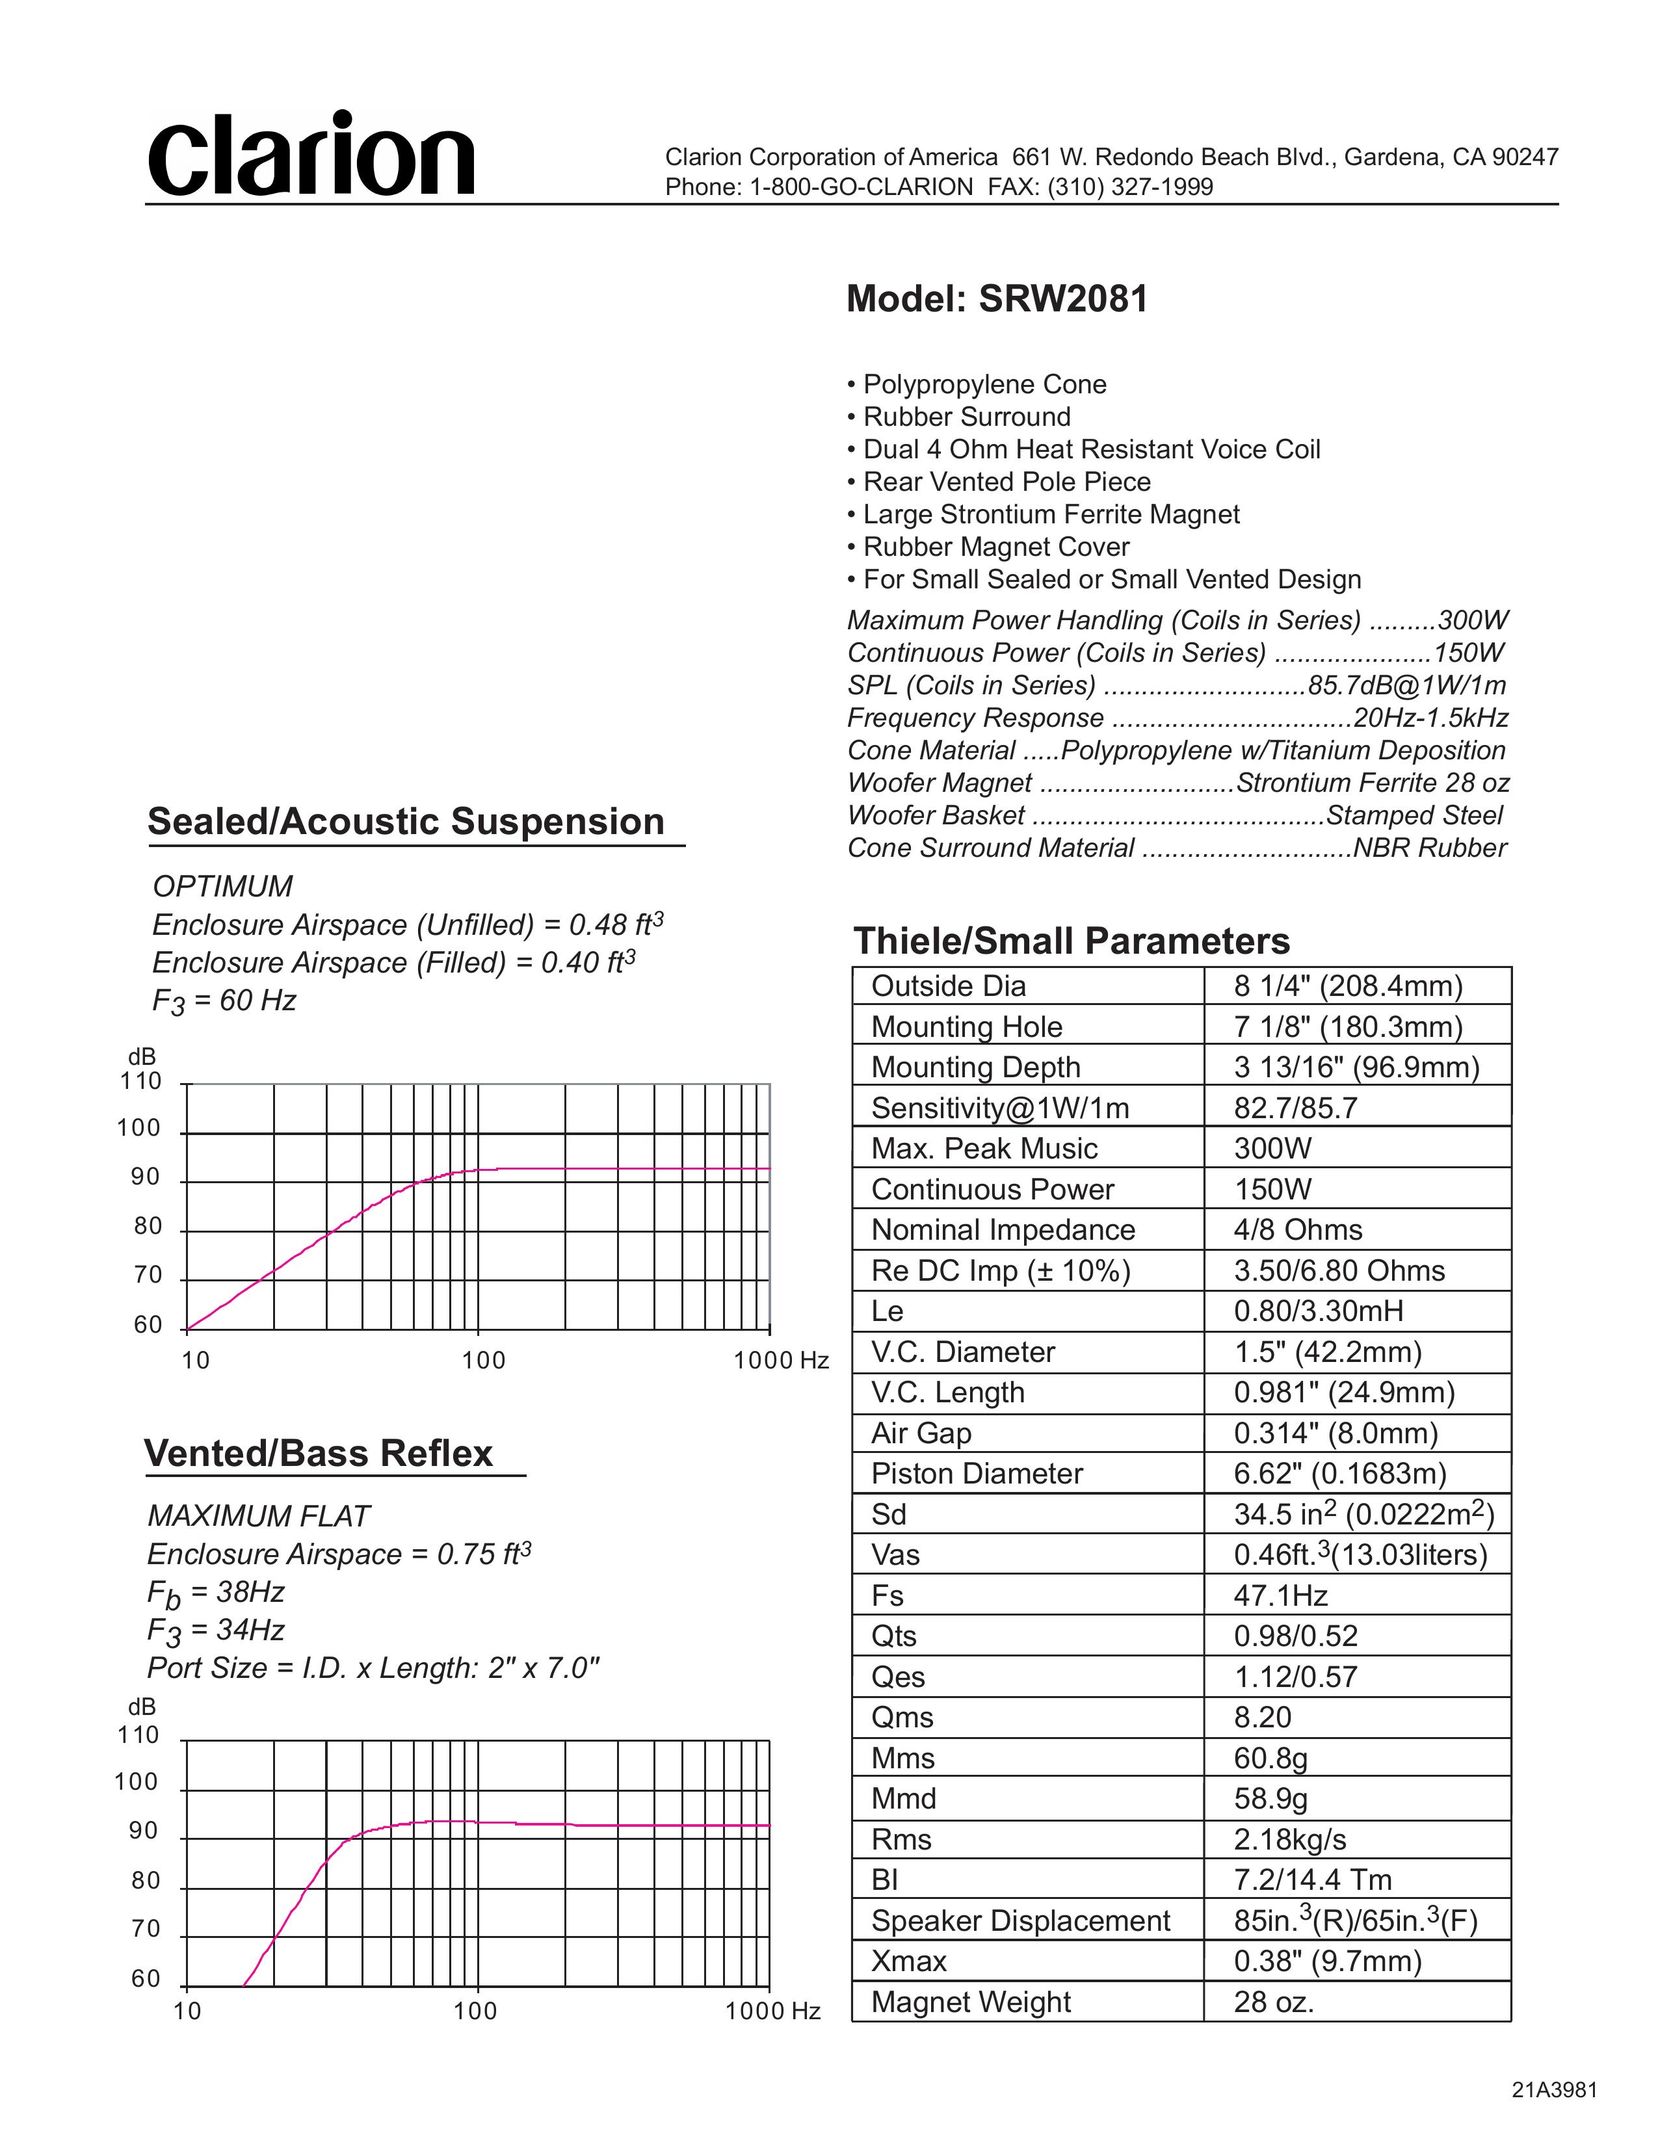 Clarion SRW2081 Speaker User Manual